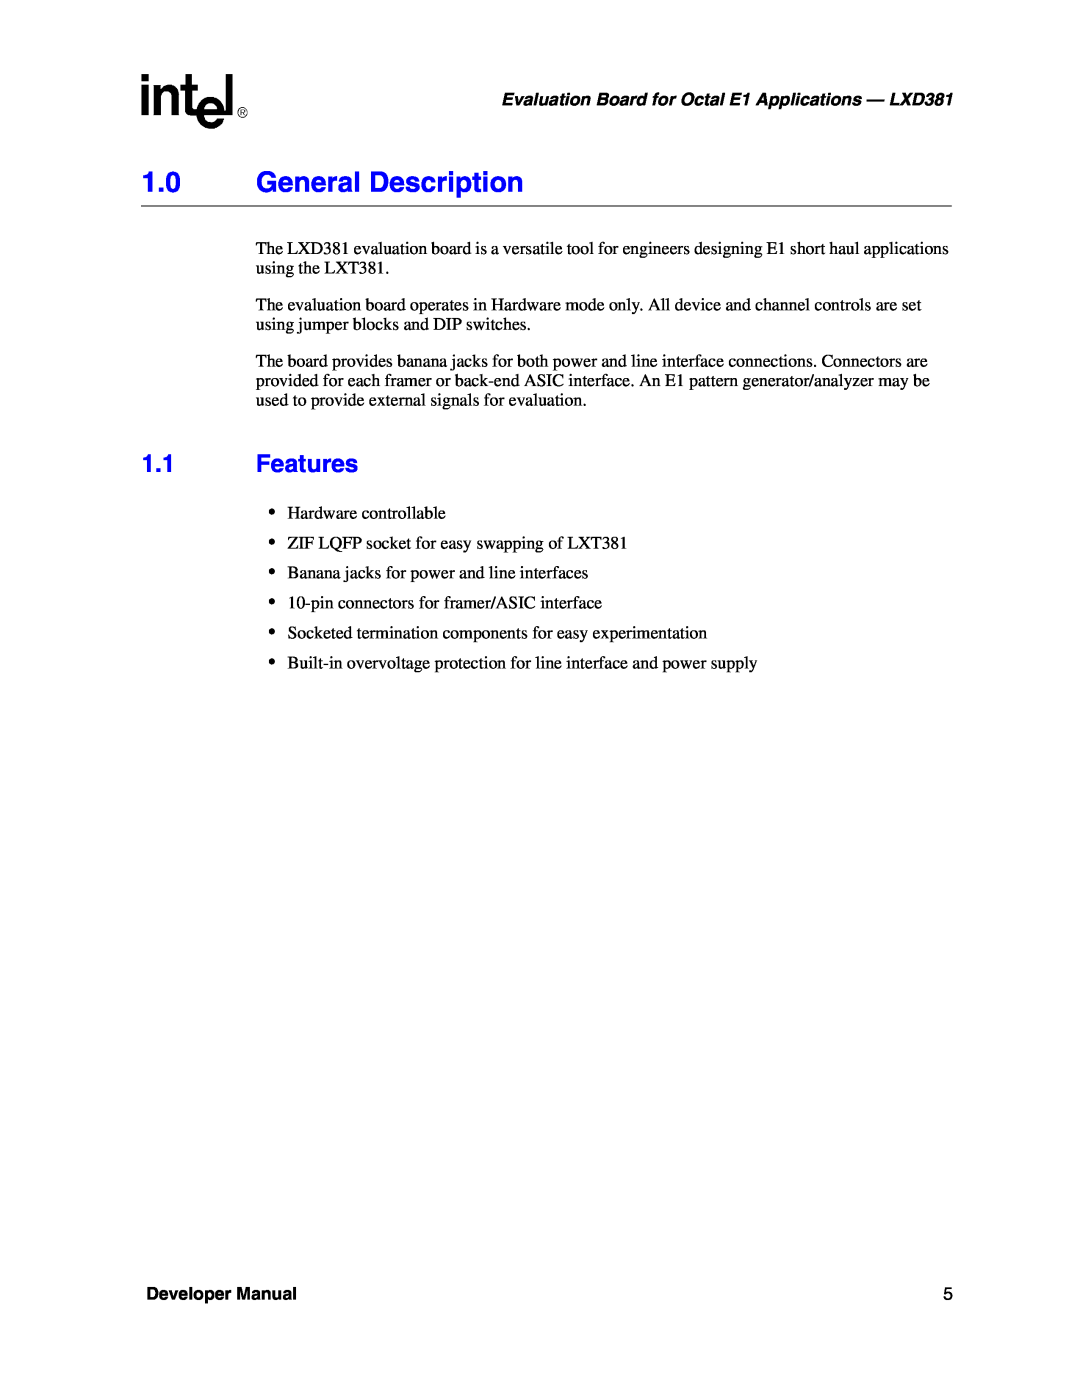 Intel manual General Description, Features, Evaluation Board for Octal E1 Applications - LXD381, Developer Manual 